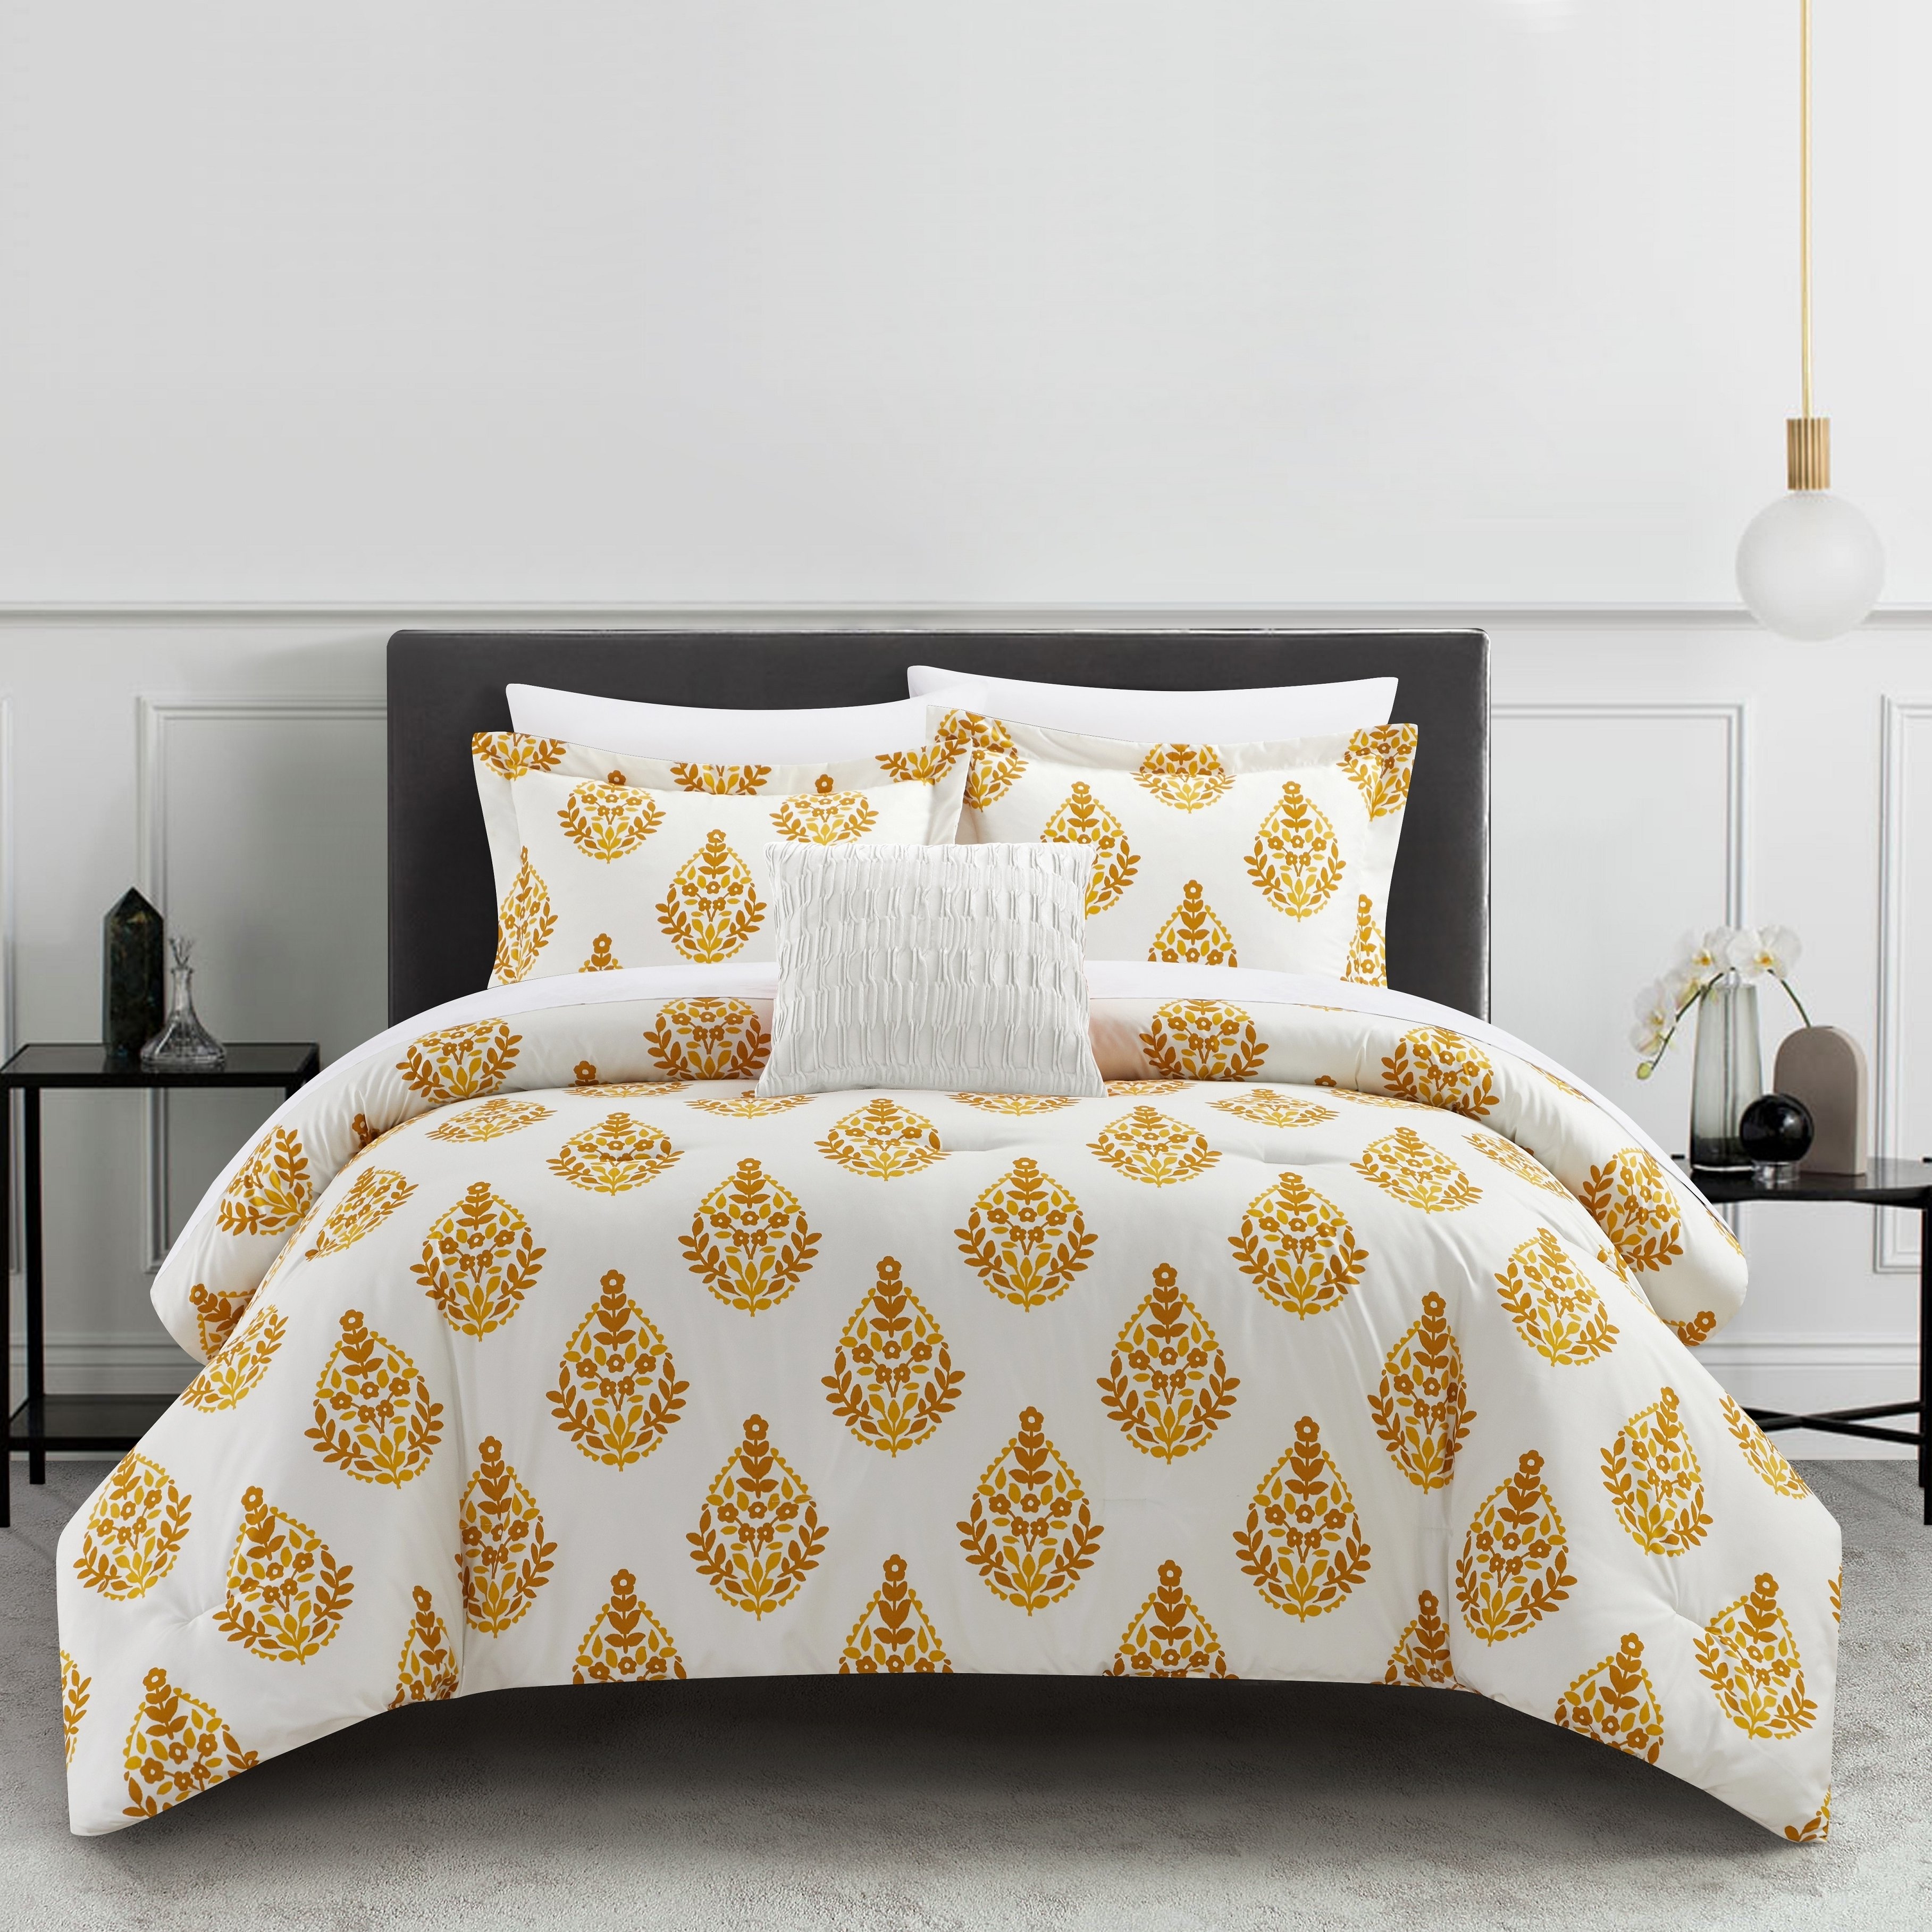 Clairessa 4 Or 3 Piece Comforter Set Floral Medallion Print Design Bedding - Yellow, Queen - 4 Piece